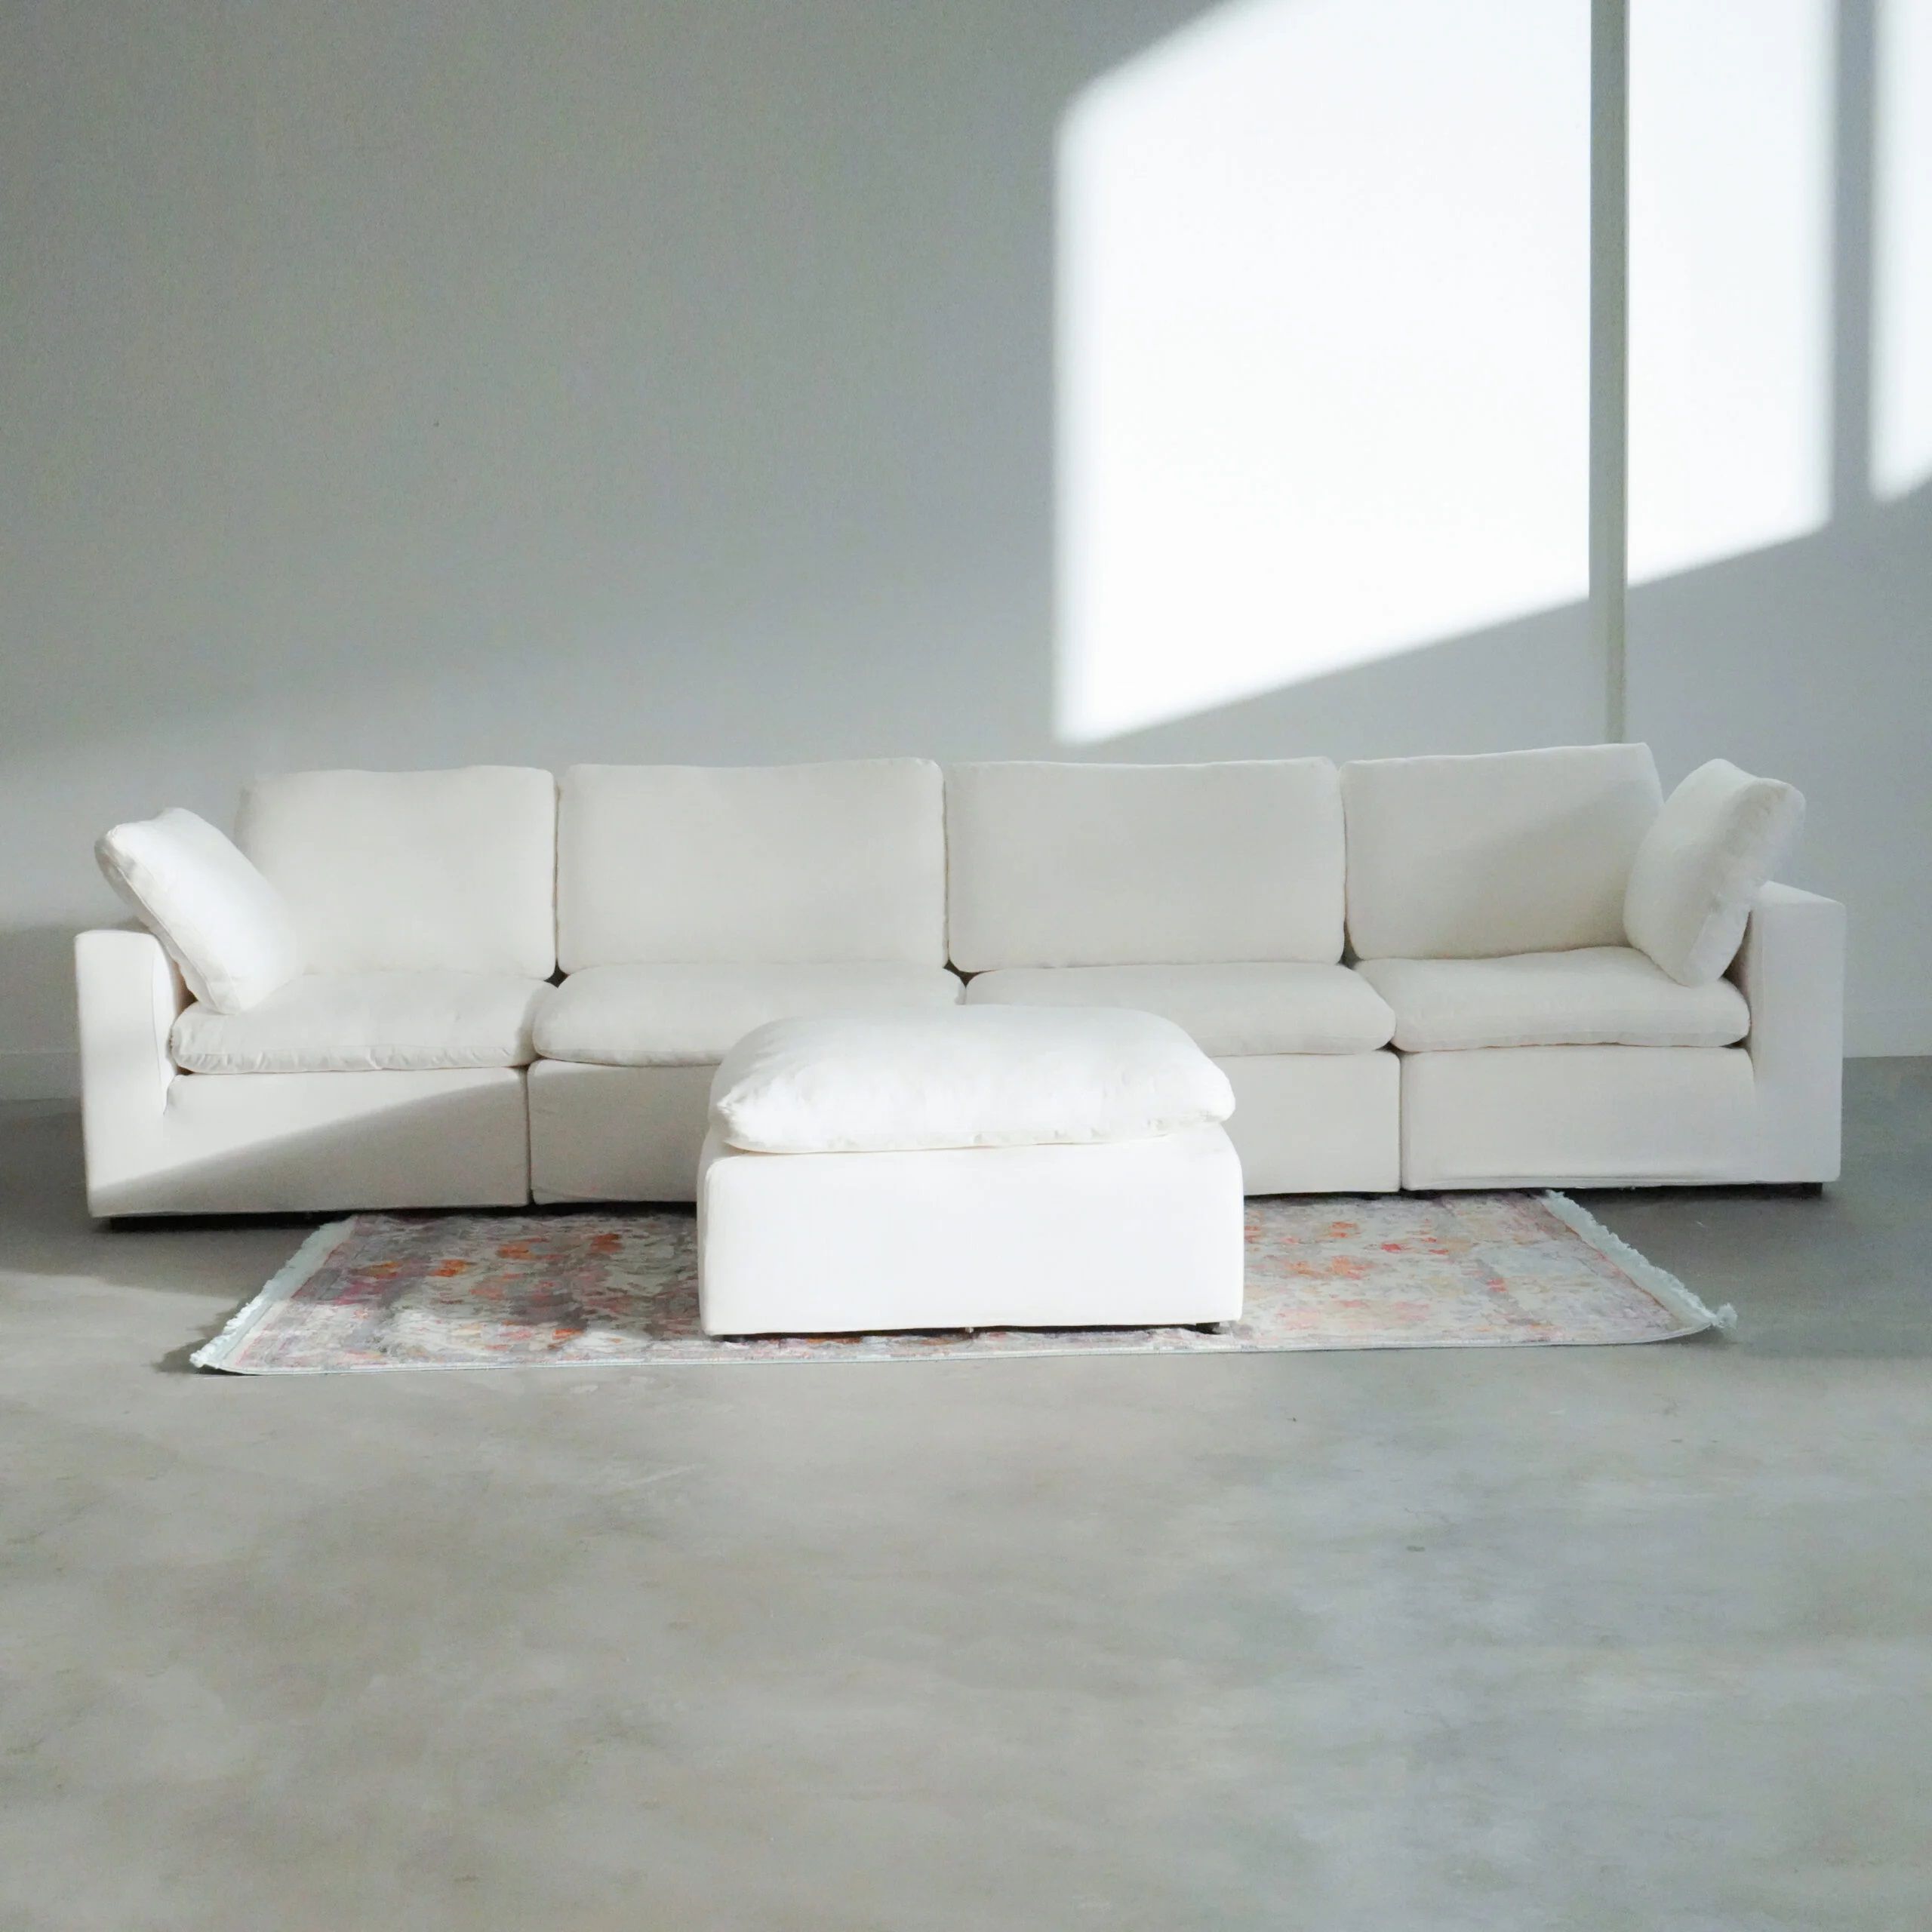 Modern 17" Petite Size Ottoman, Premium Fabric Upholstered Living Room Cube Shape Ottoman With Plush Seat Cushion, White